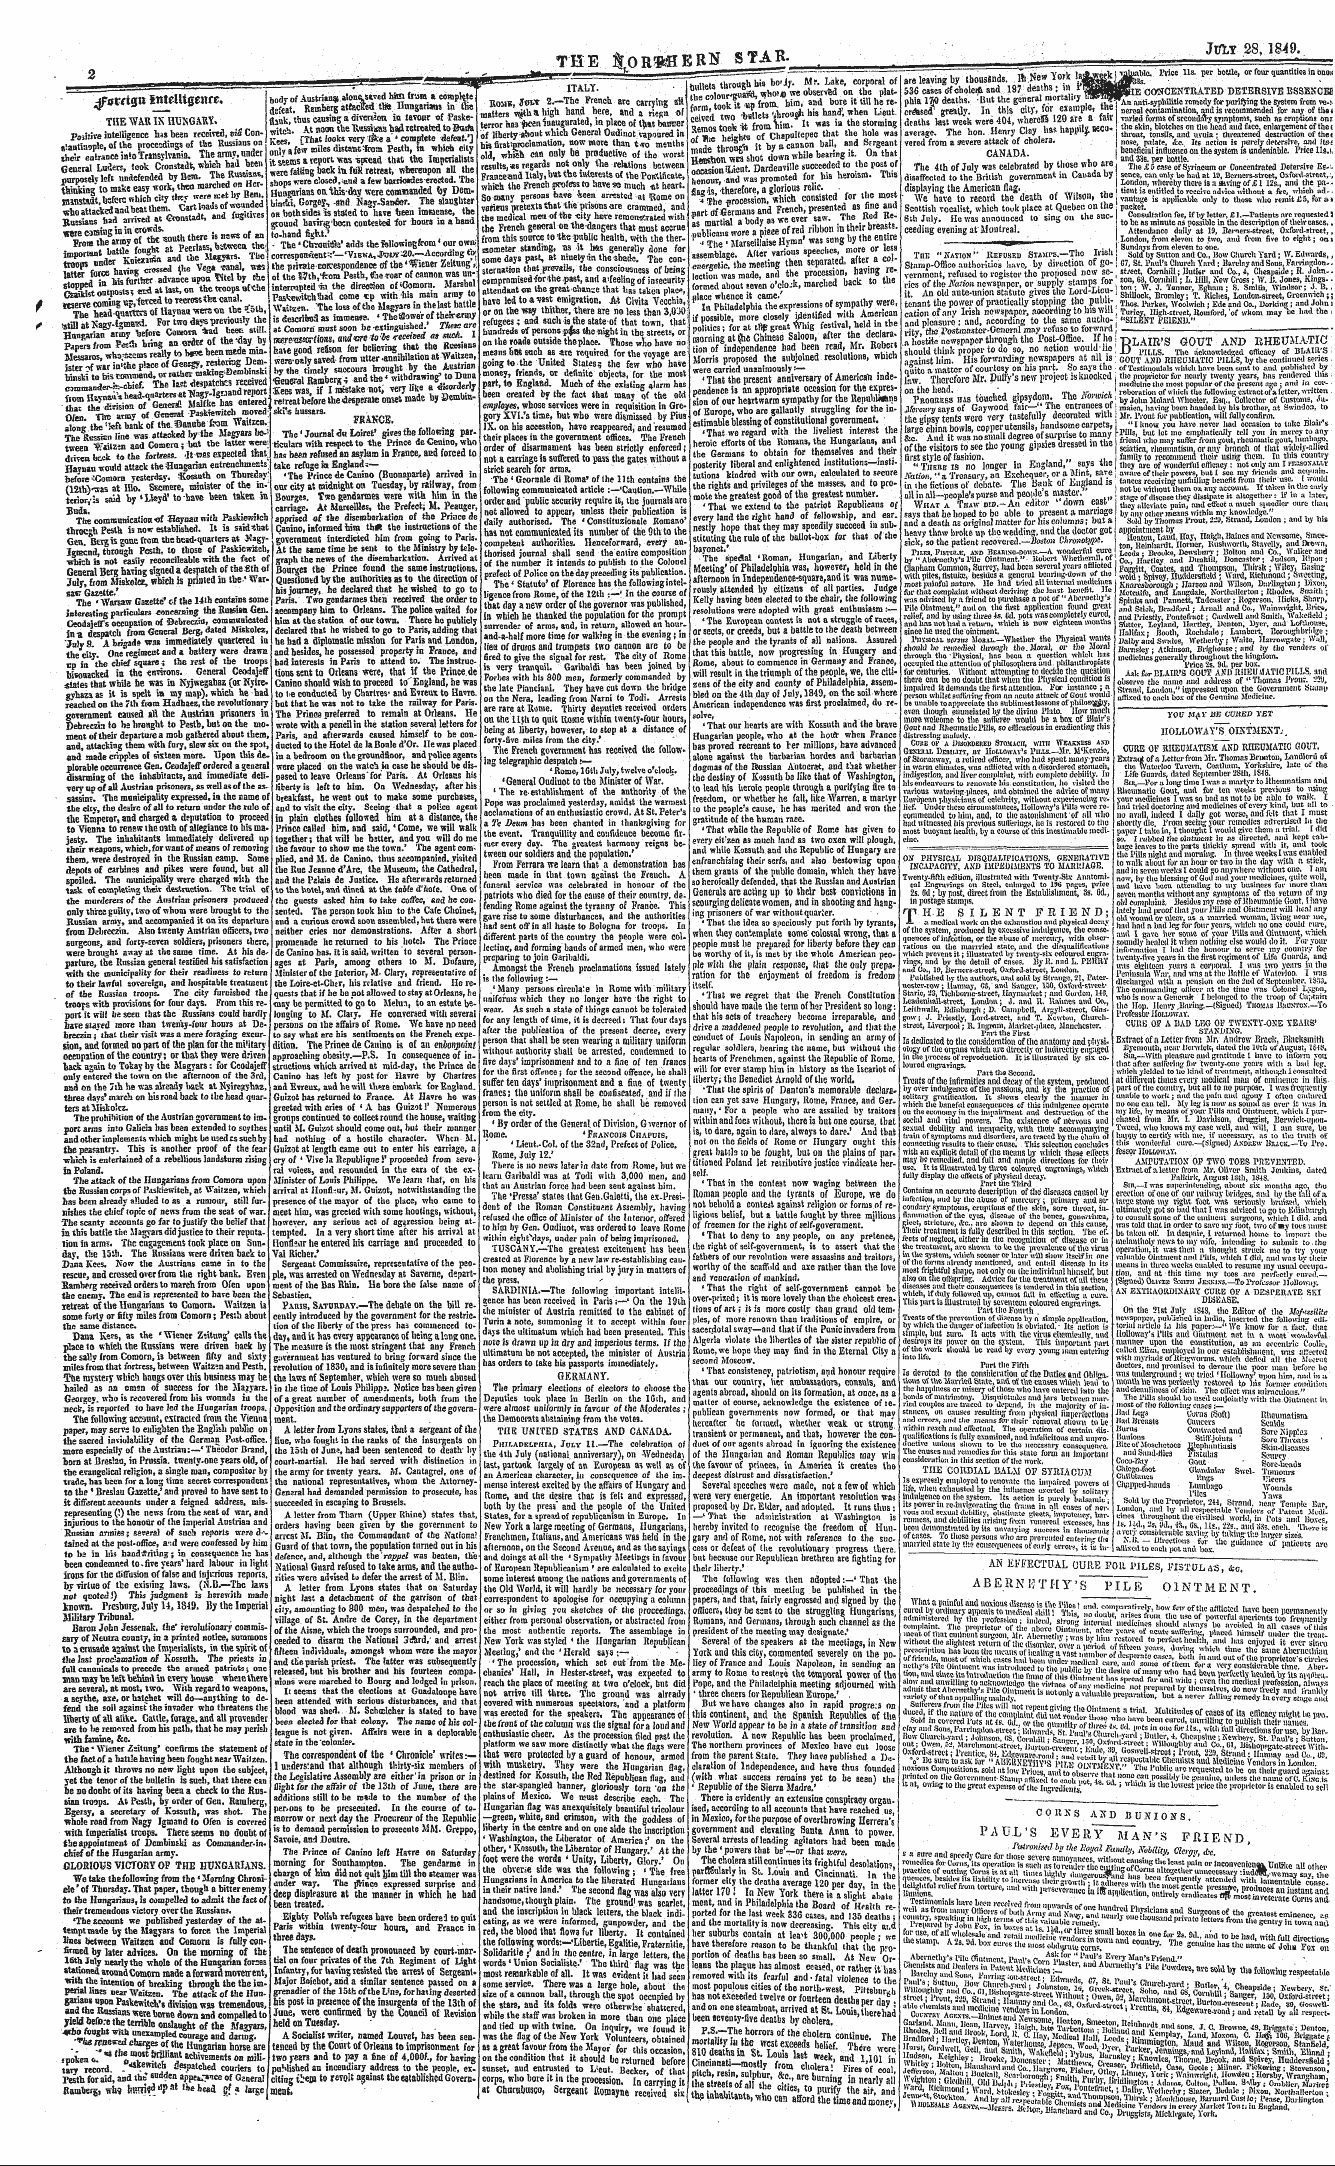 Northern Star (1837-1852): jS F Y, 3rd edition - Ad00210